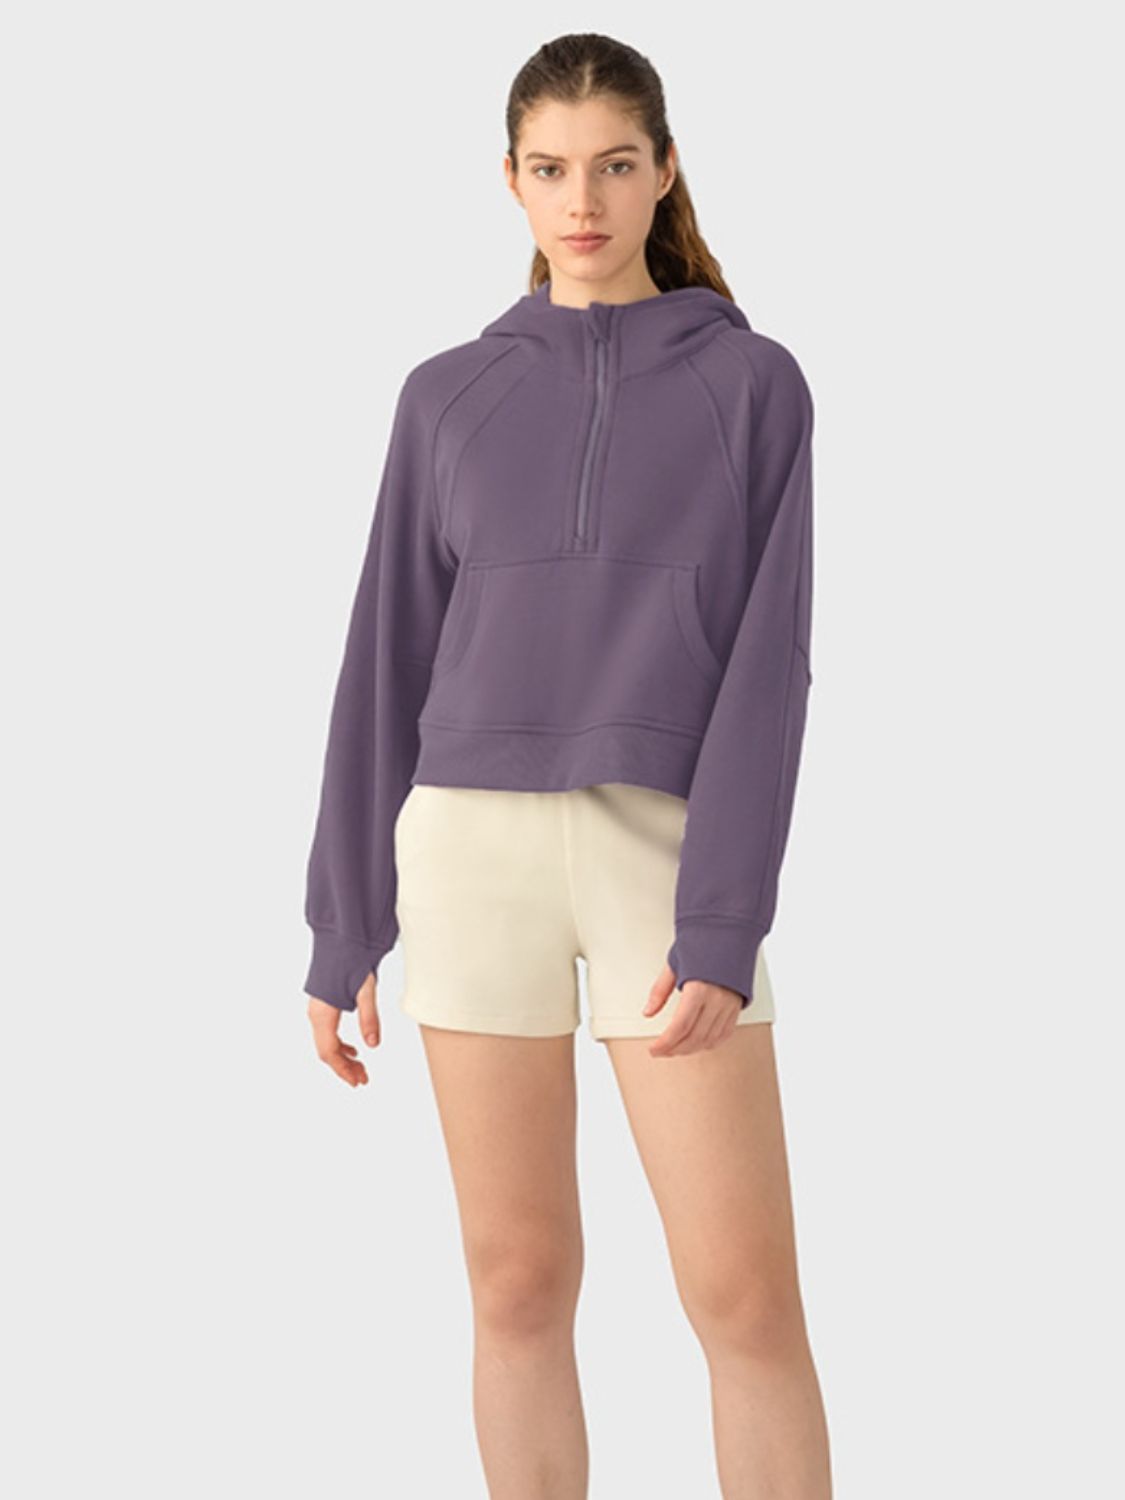 Half-Zip Long Sleeve Sports Hoodie - Fashion Girl Online Store